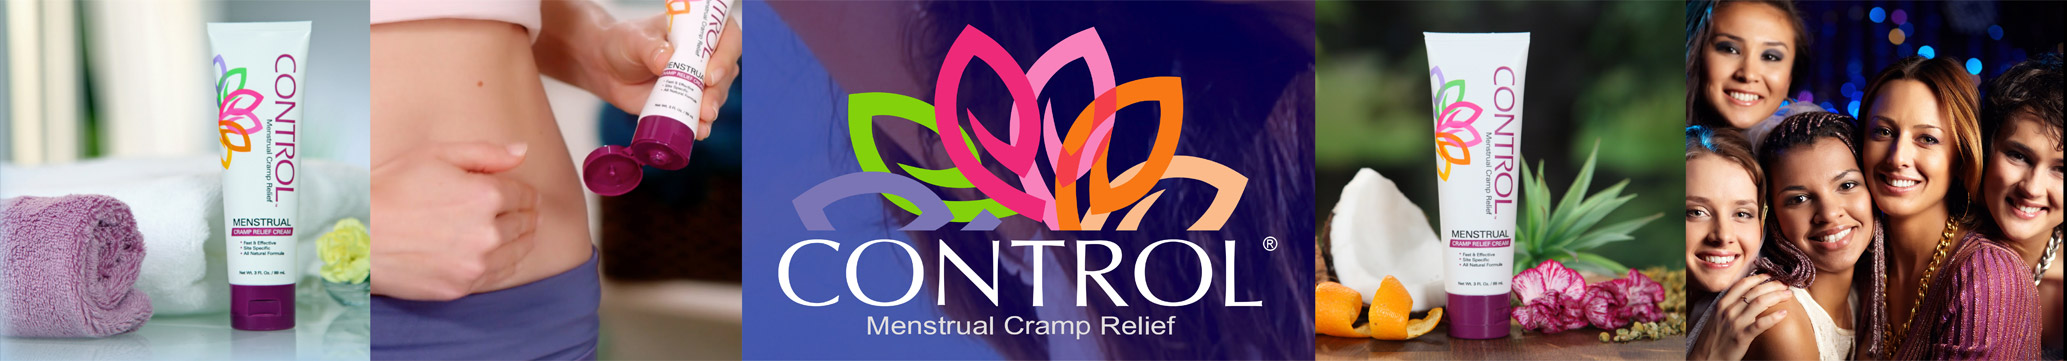 DR JOE LAB PMS Menstrual Pain Relief Cream